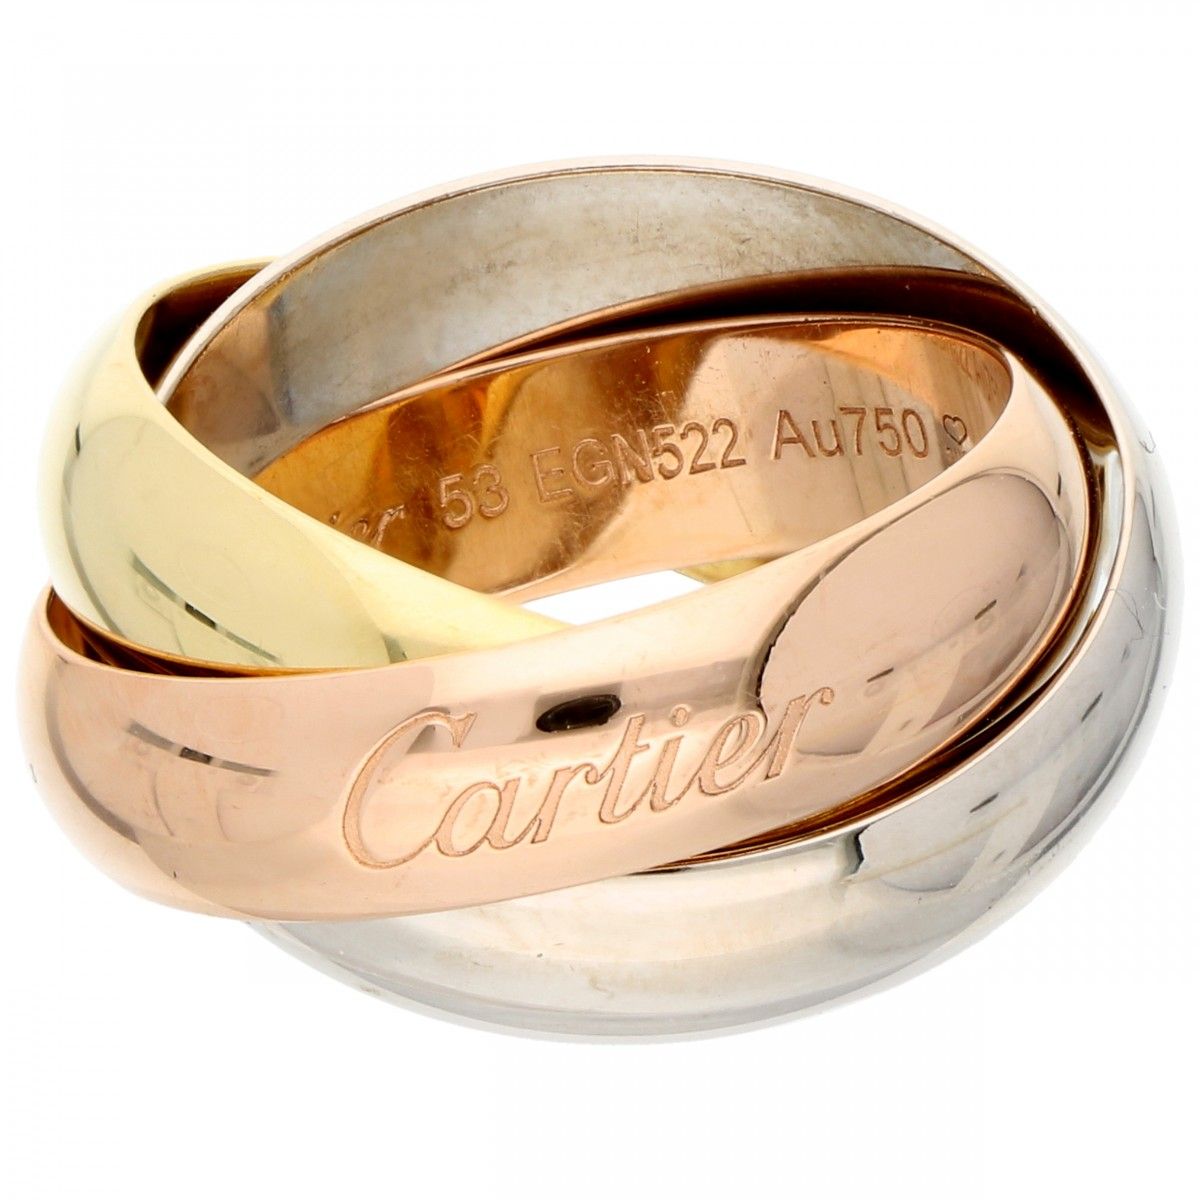 18K. Tricolor gold Cartier 'Trinity' ring. 序号：53 EGN522。印记：©卡地亚，53 EGN522，Au750，&hellip;